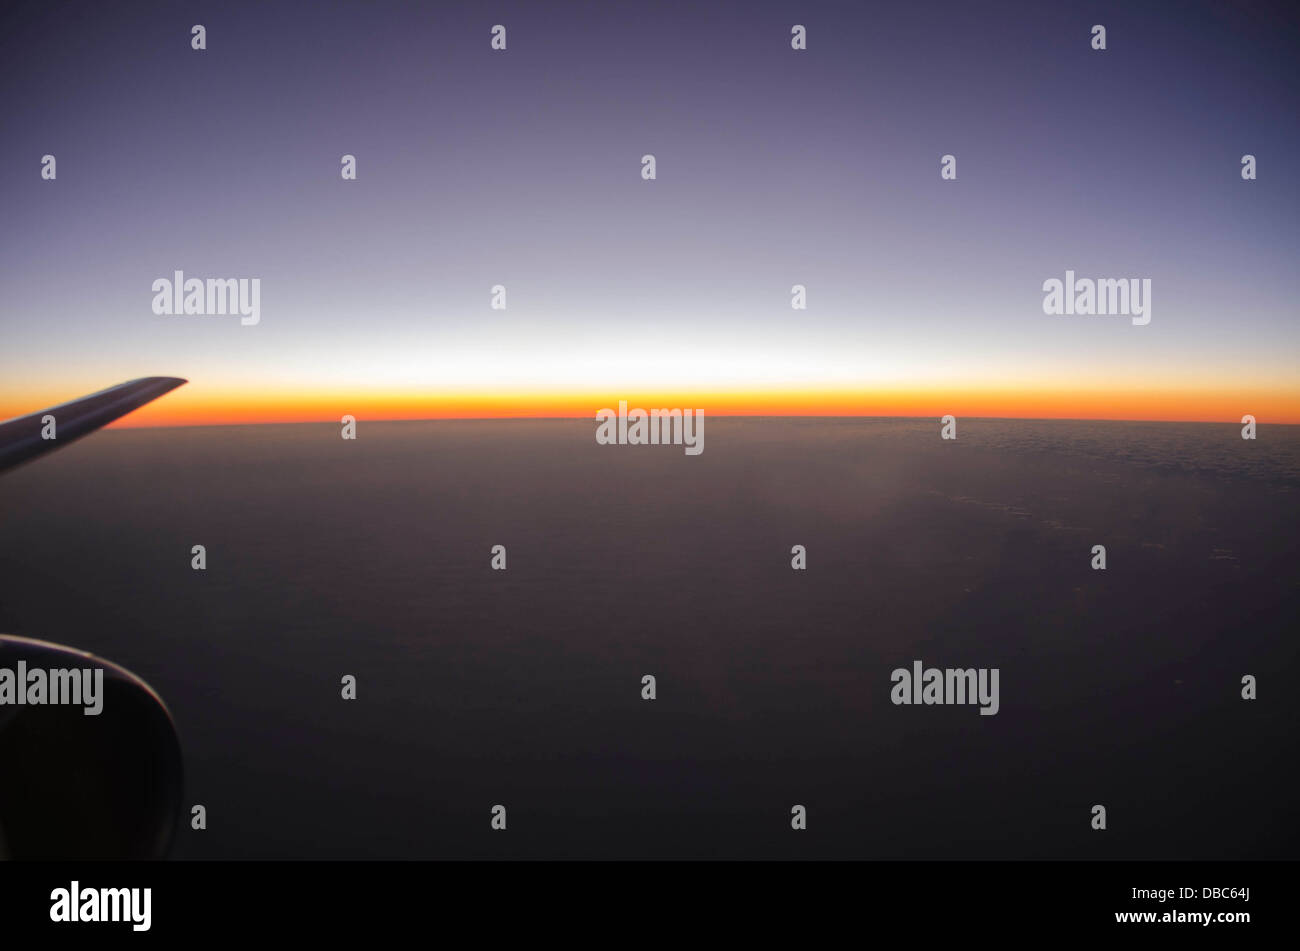 Veiw of sunset from airplane window Stock Photo